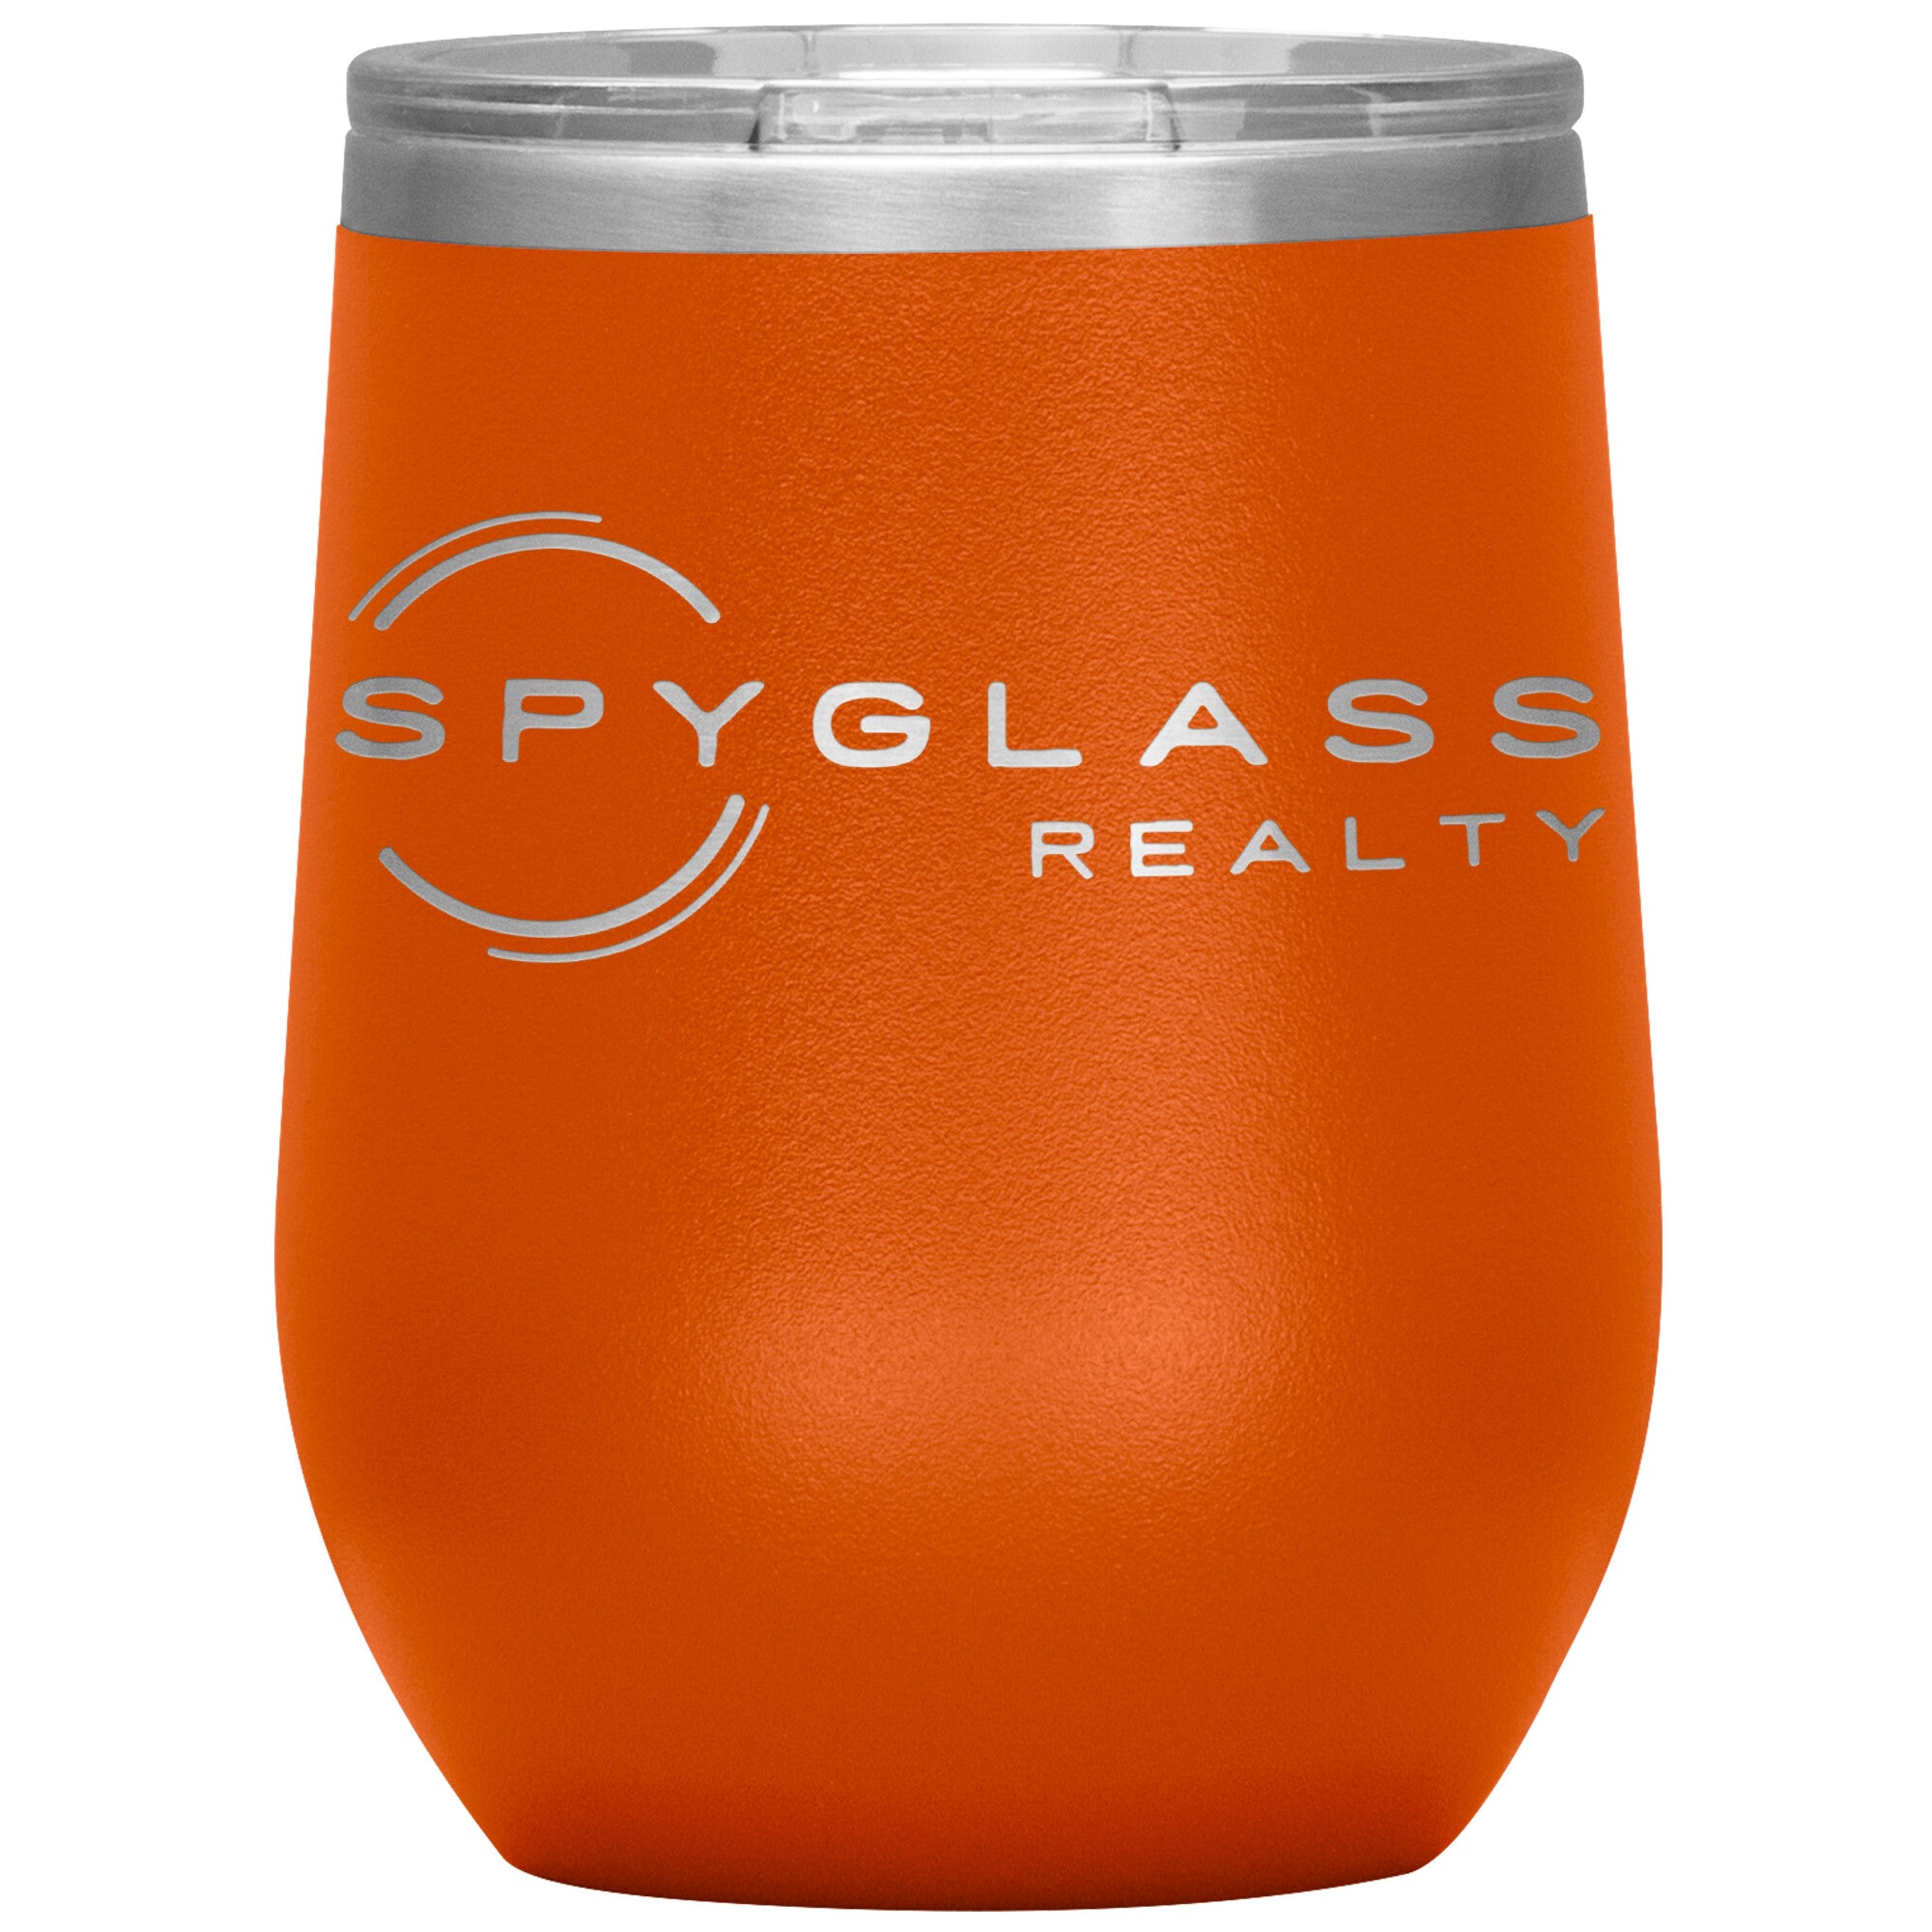 12oz Spyglass Realty Wine Insulated Tumbler